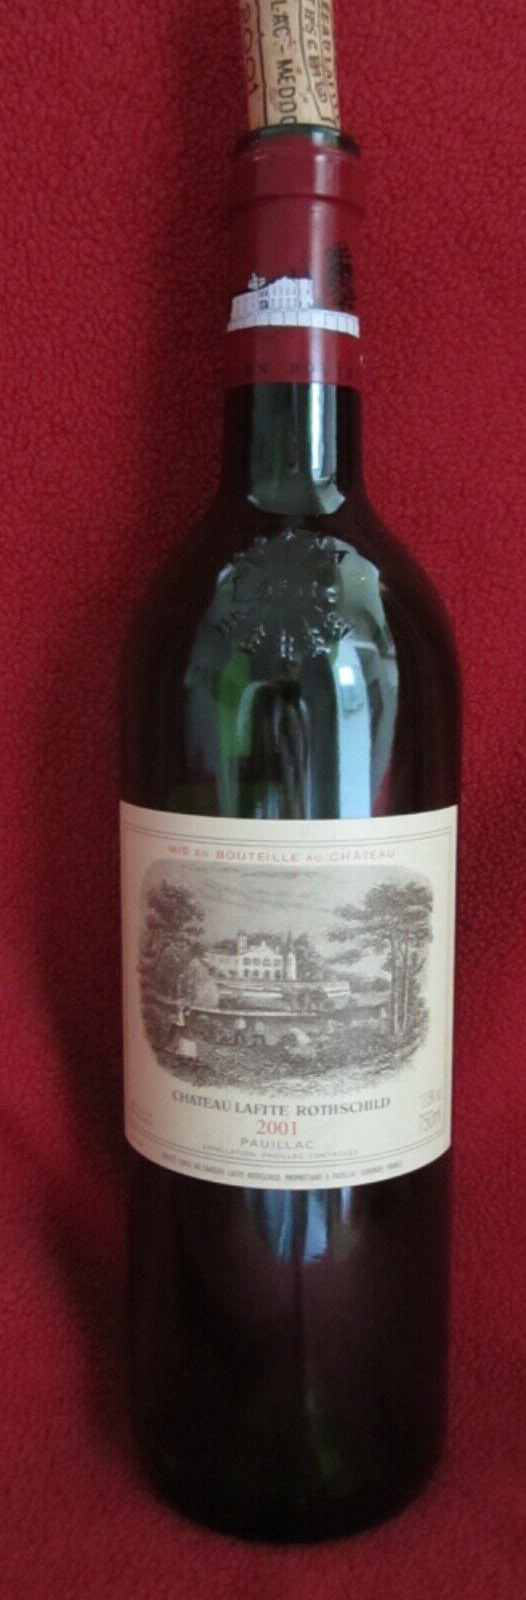 2001 Chateau Lafite Rothschild Empty Wine Bottle with Cork